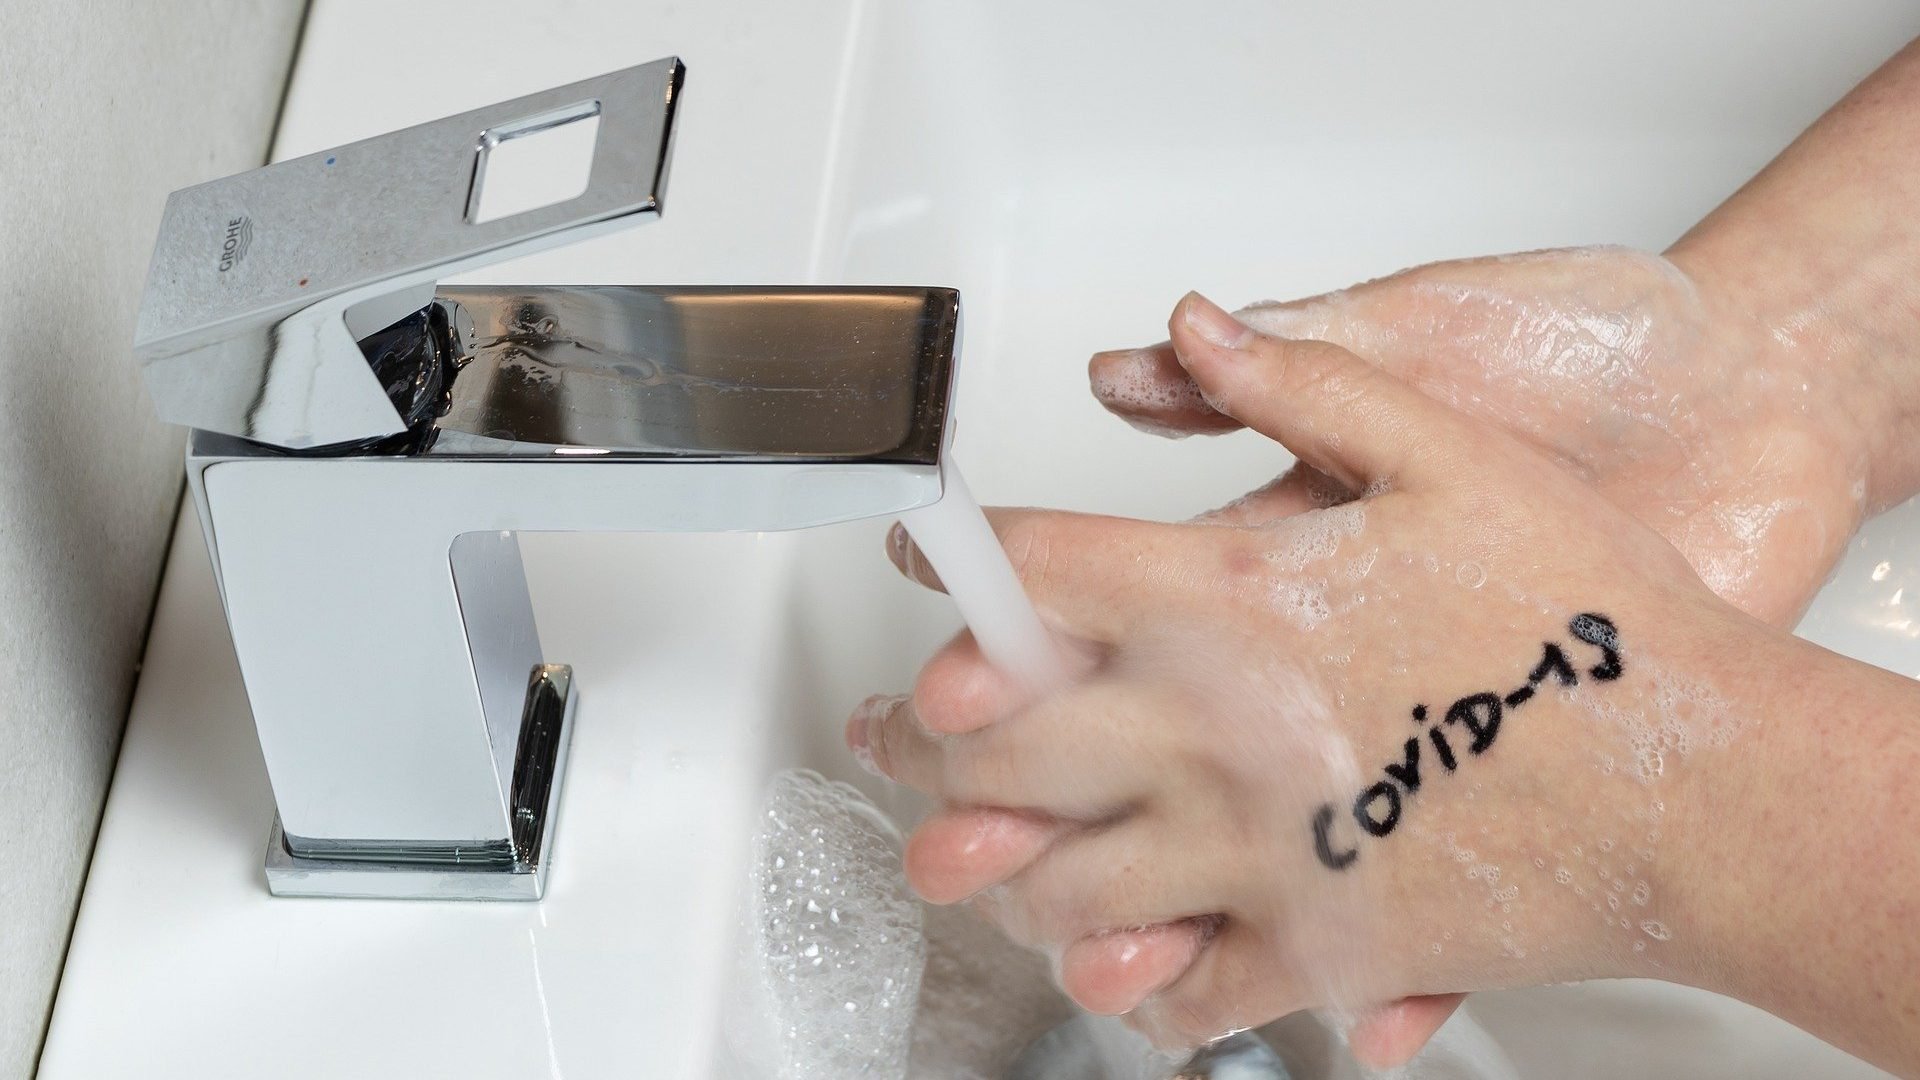 Washing hands